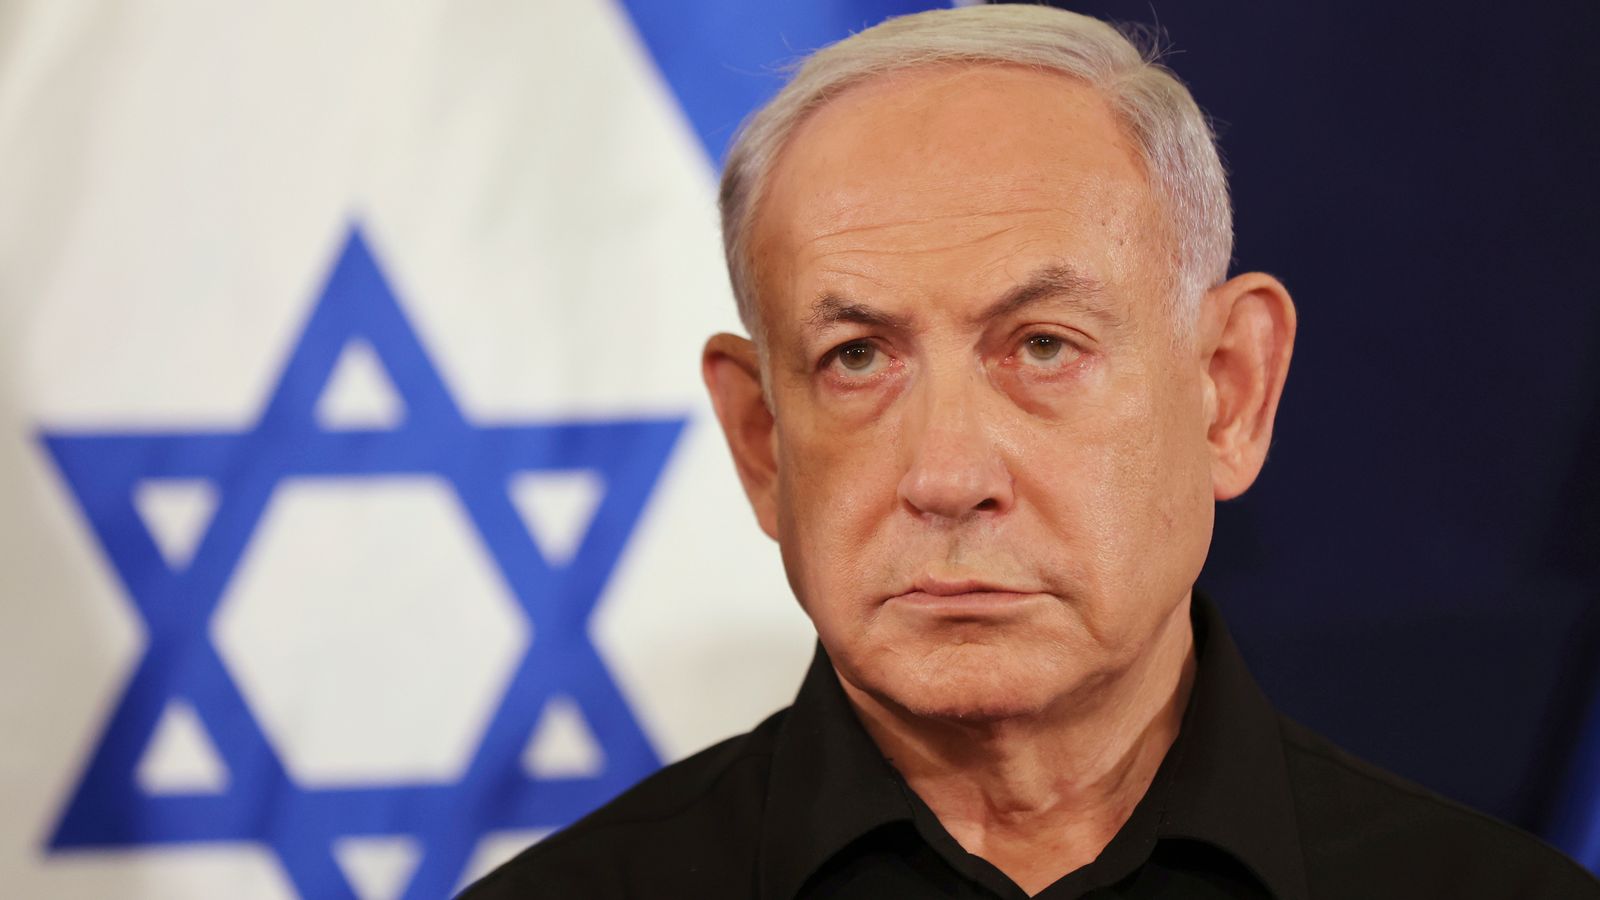 Israel's Prime Minister Benjamin Netanyahu to undergo surgery for hernia under full sedation